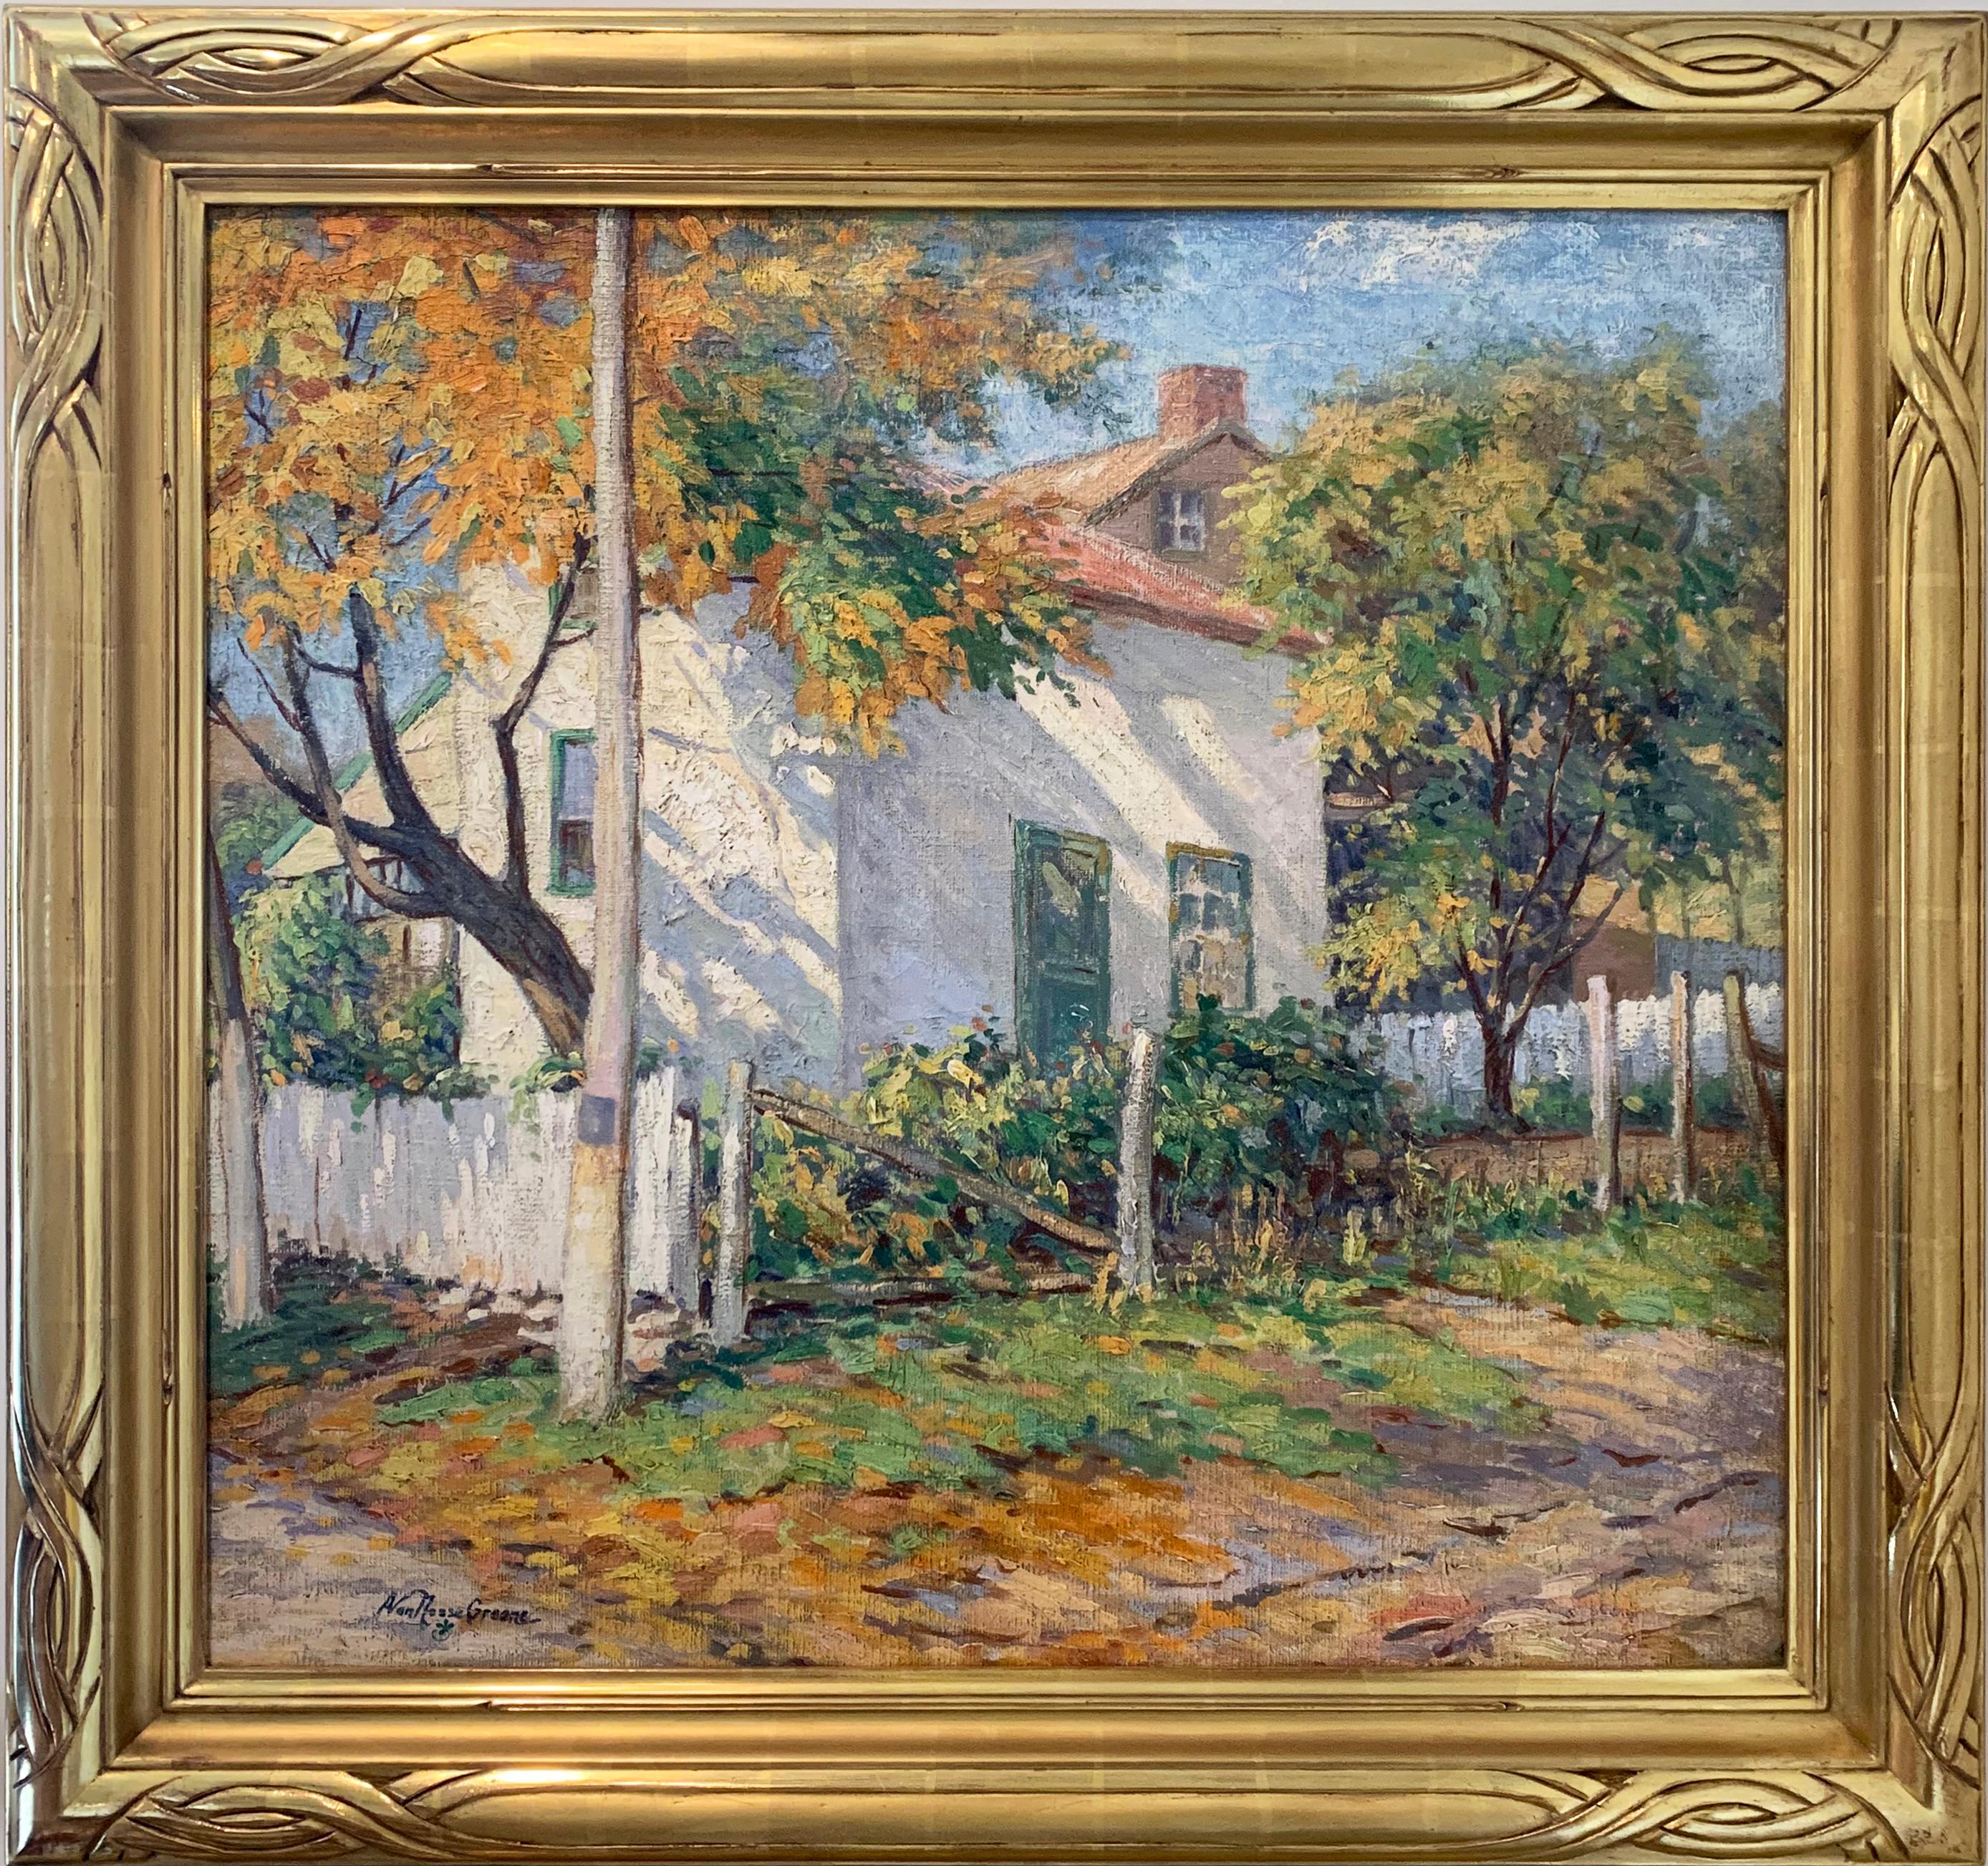 Albert Van Nesse Greene Landscape Painting - Sunlight and Shadow, White House, American Impressionist Landscape